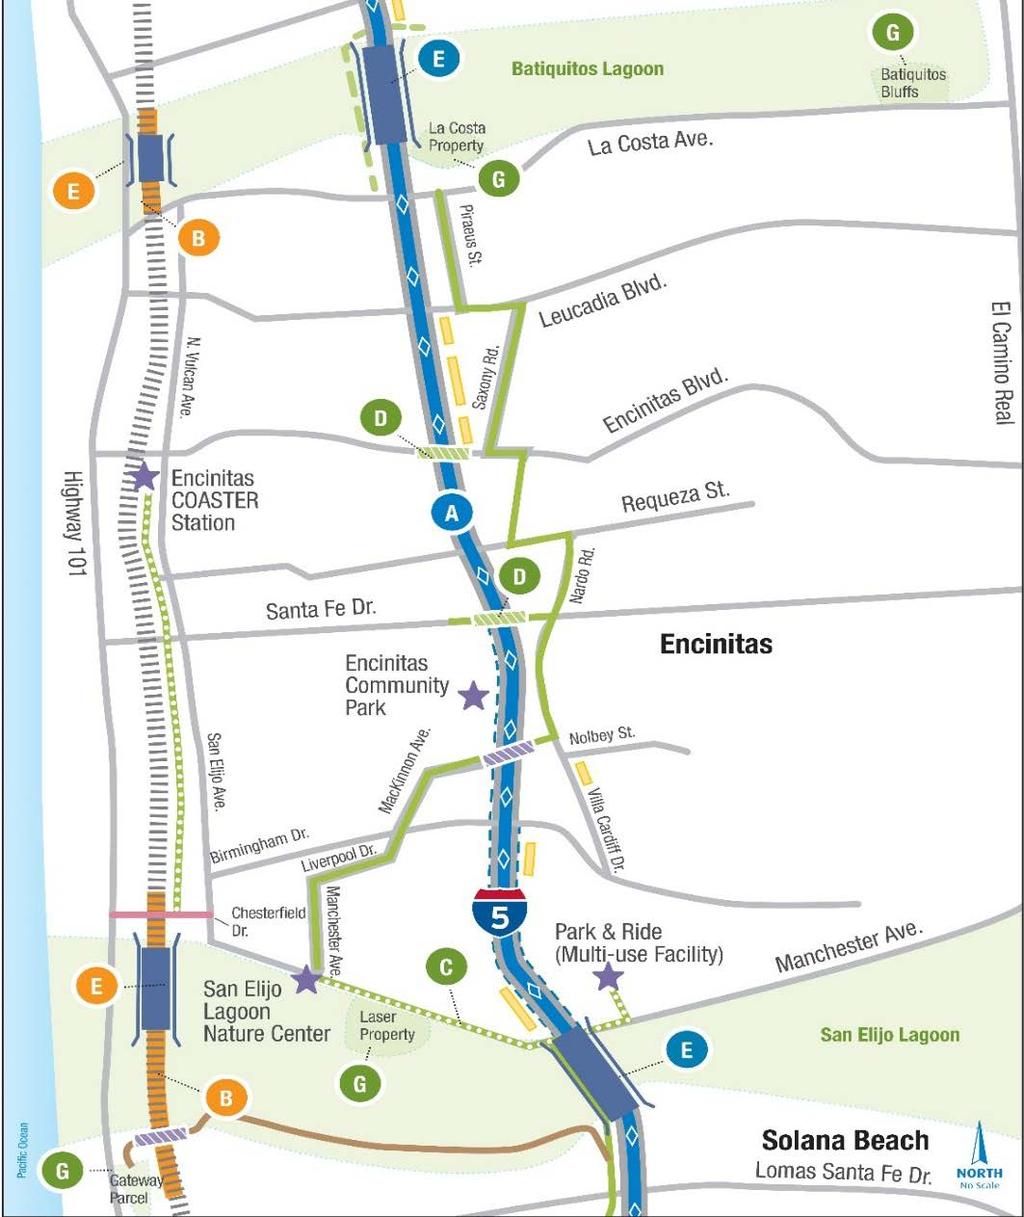 Phase 1 Encinitas (2016-2020) A B C D E E HOV/Carpool Lanes from Solana Beach to northern Carlsbad New Double Track North Coast Bike Trail Encinitas Blvd.